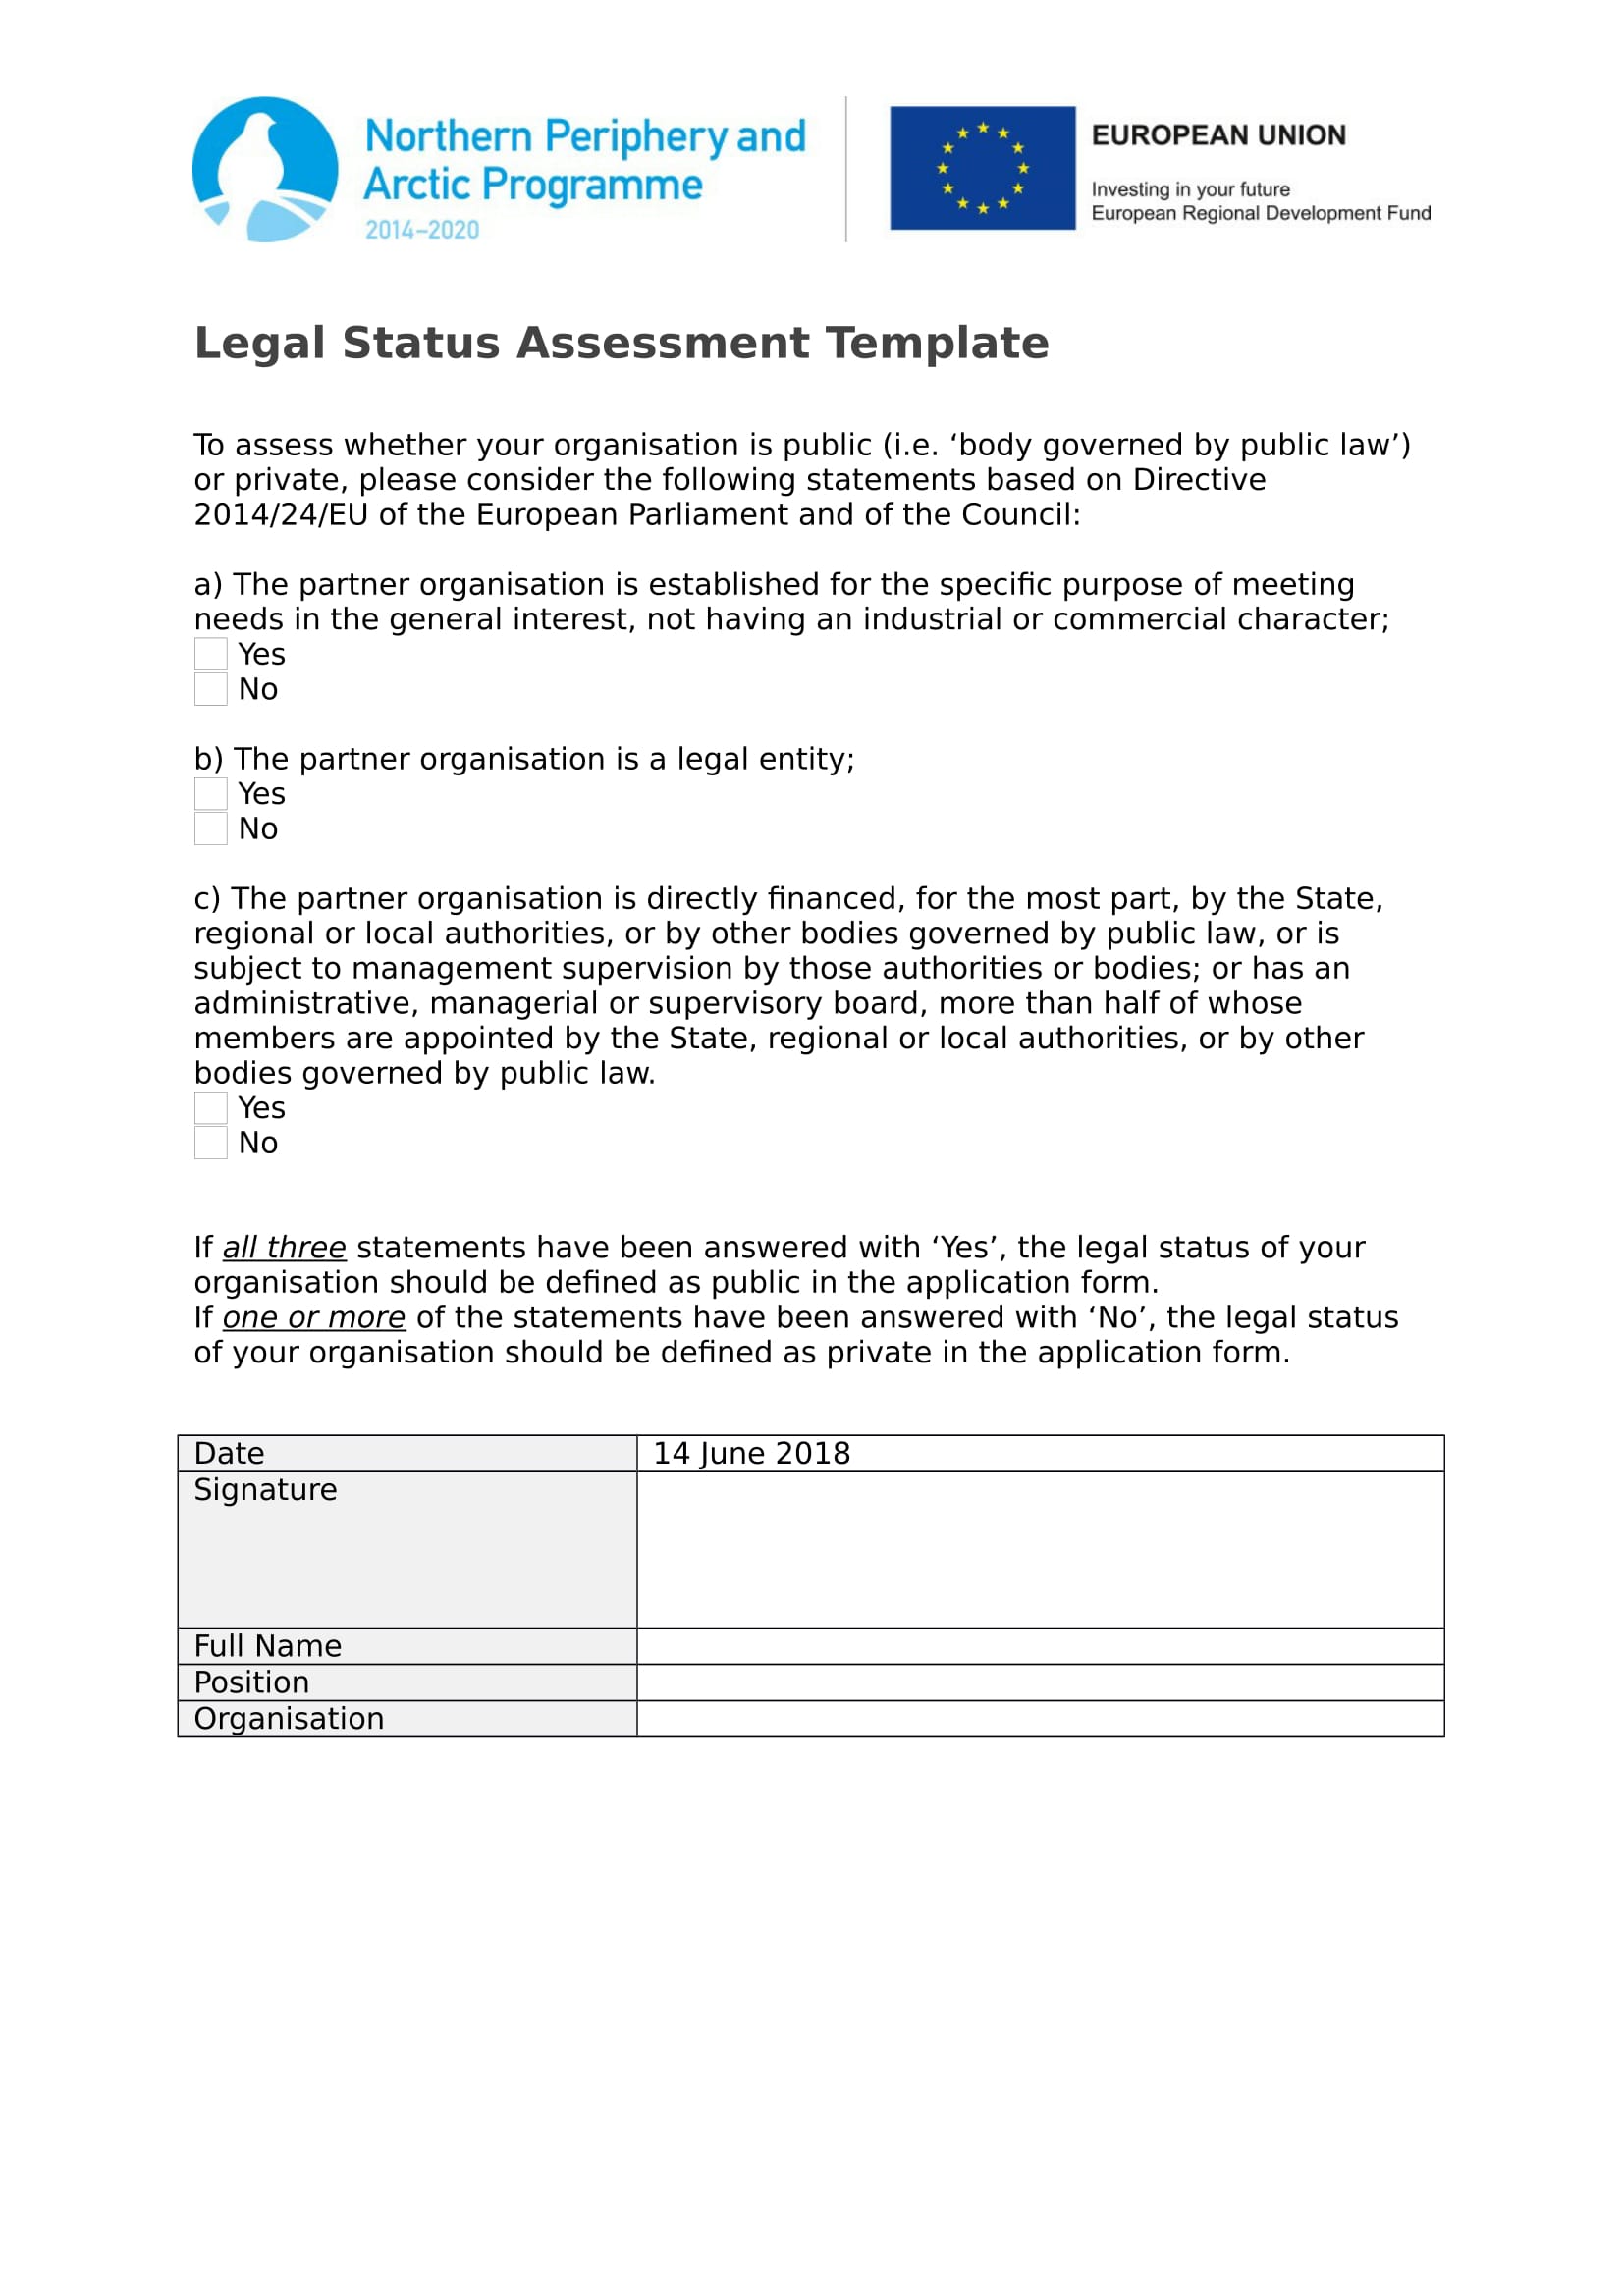 legal status assessment template example 1